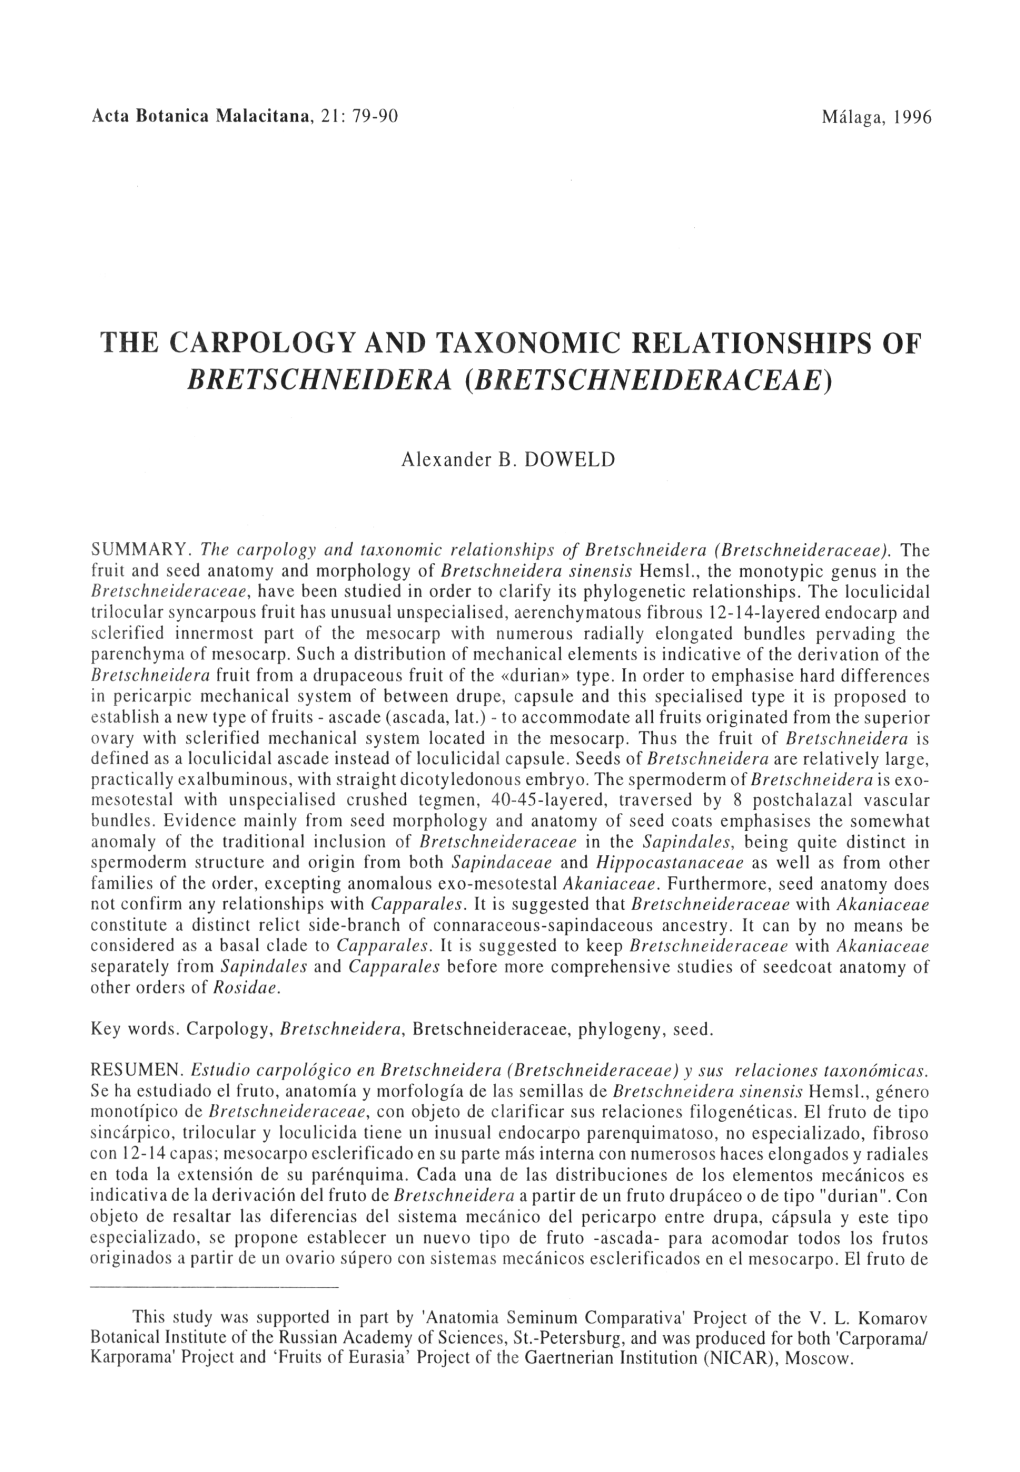 The Carpology and Taxonomic Relationships of Bretschneidera (Bretschneideraceae)